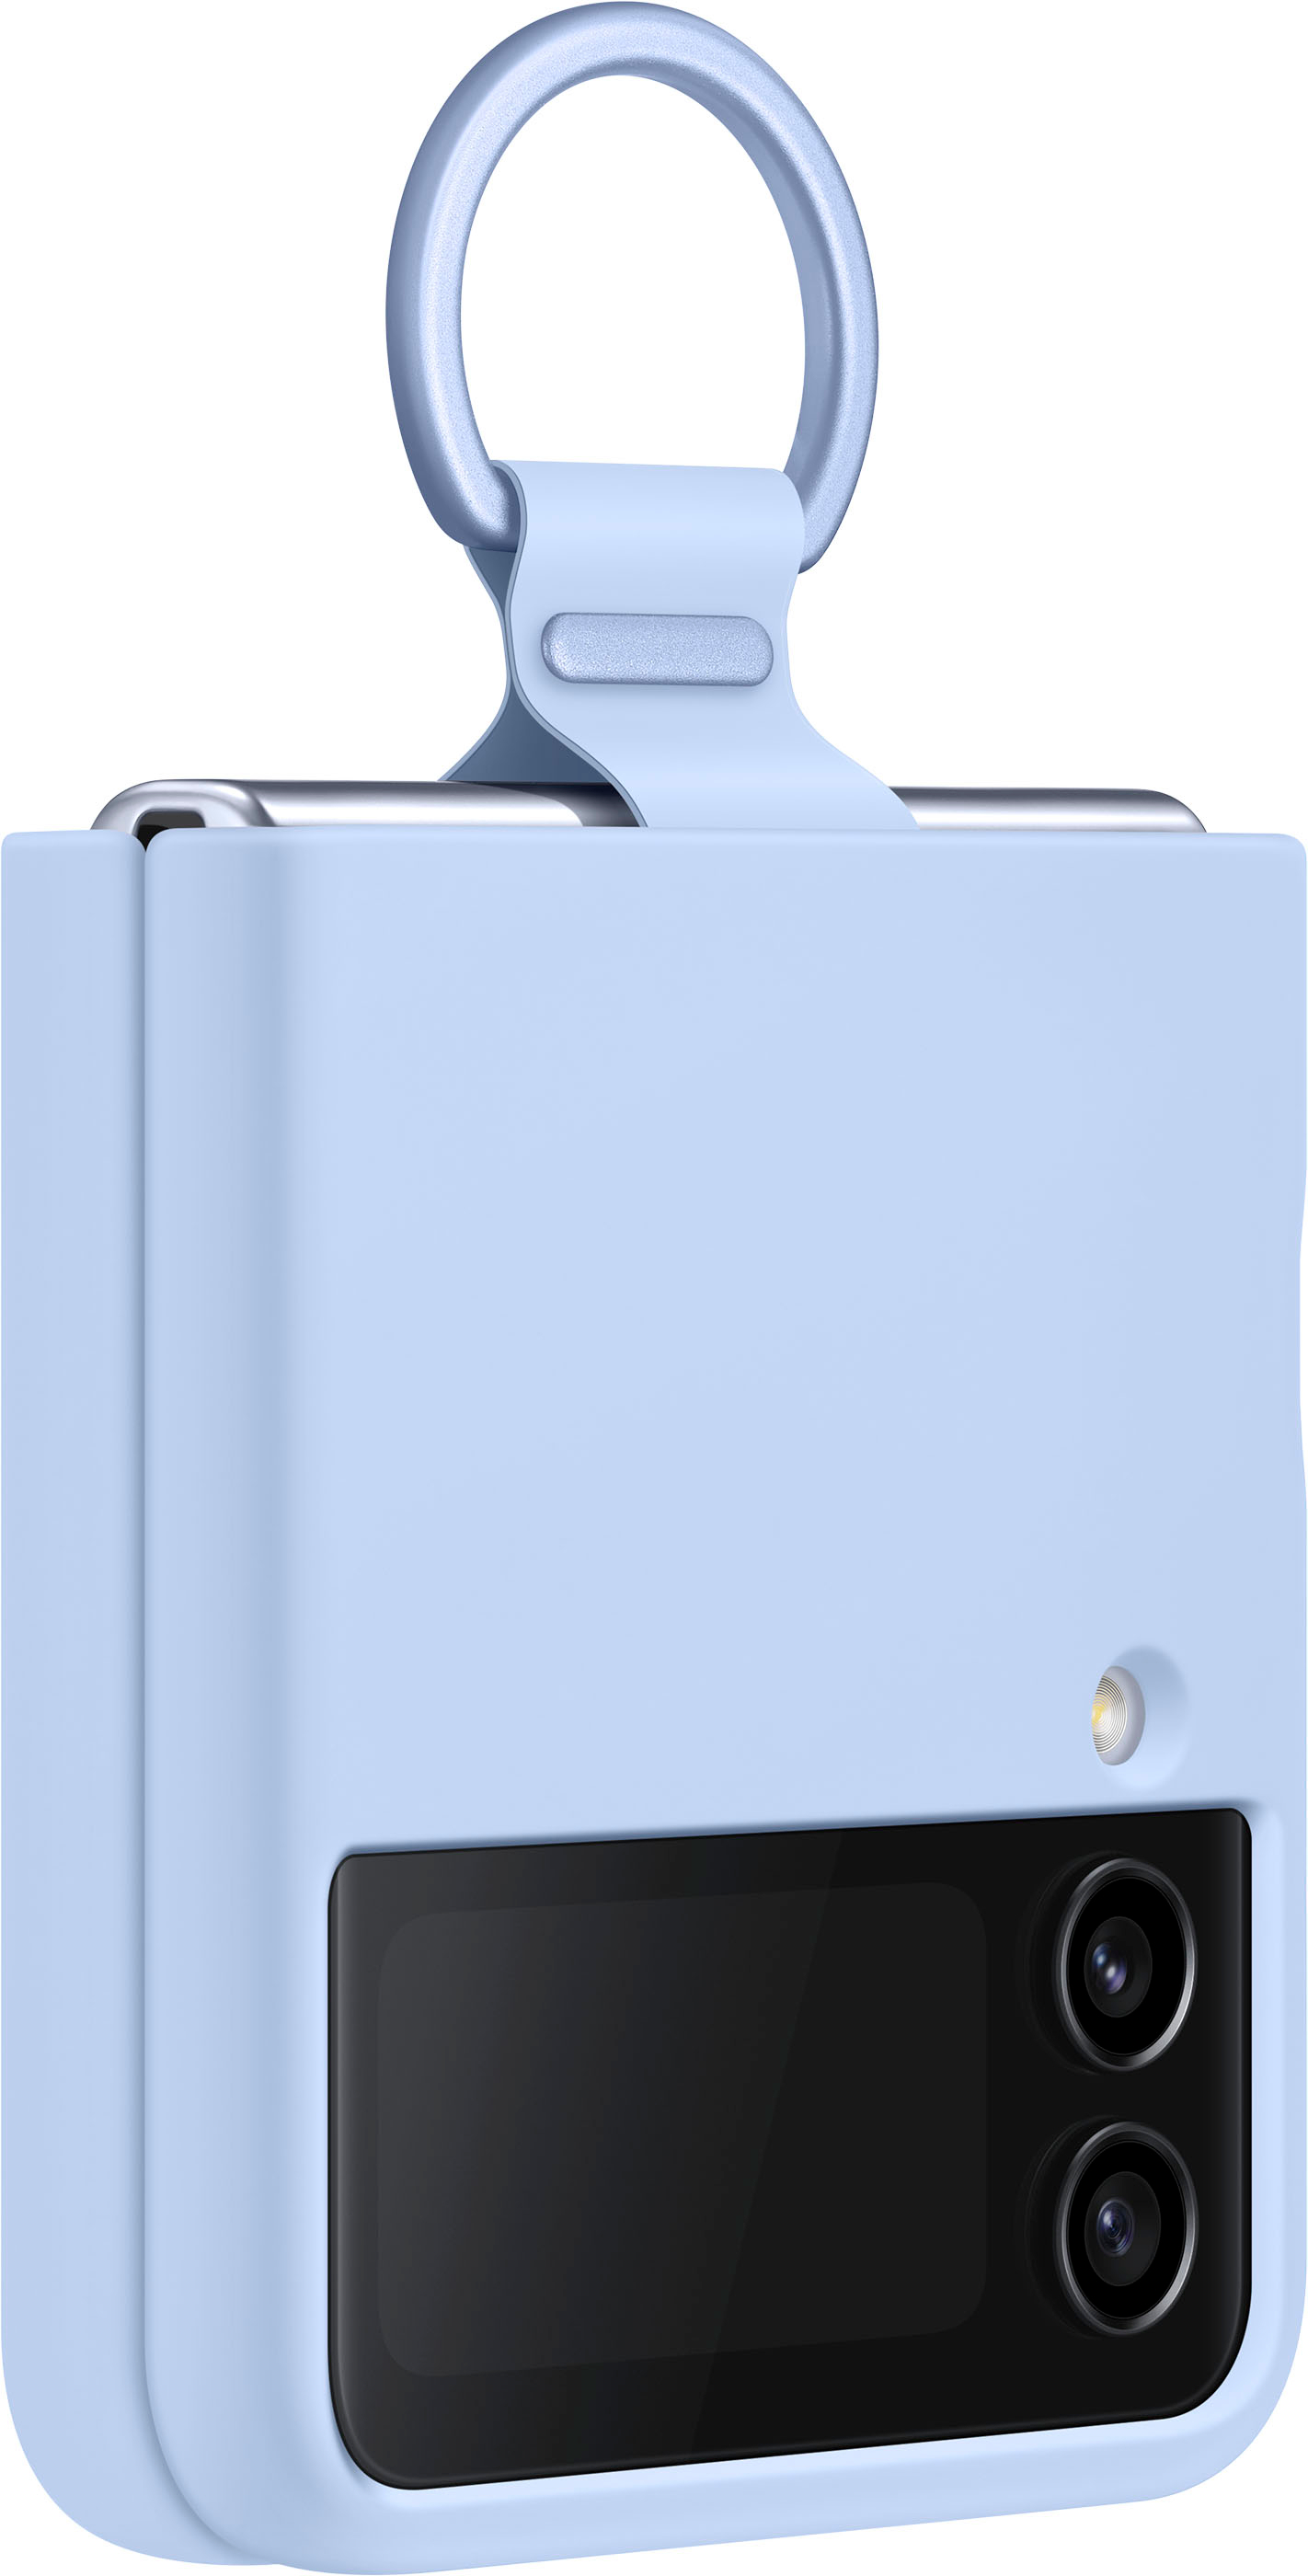 Samsung Silicone Cover with Strap for Galaxy Z Flip4 White EF-GF721TWEGUS -  Best Buy